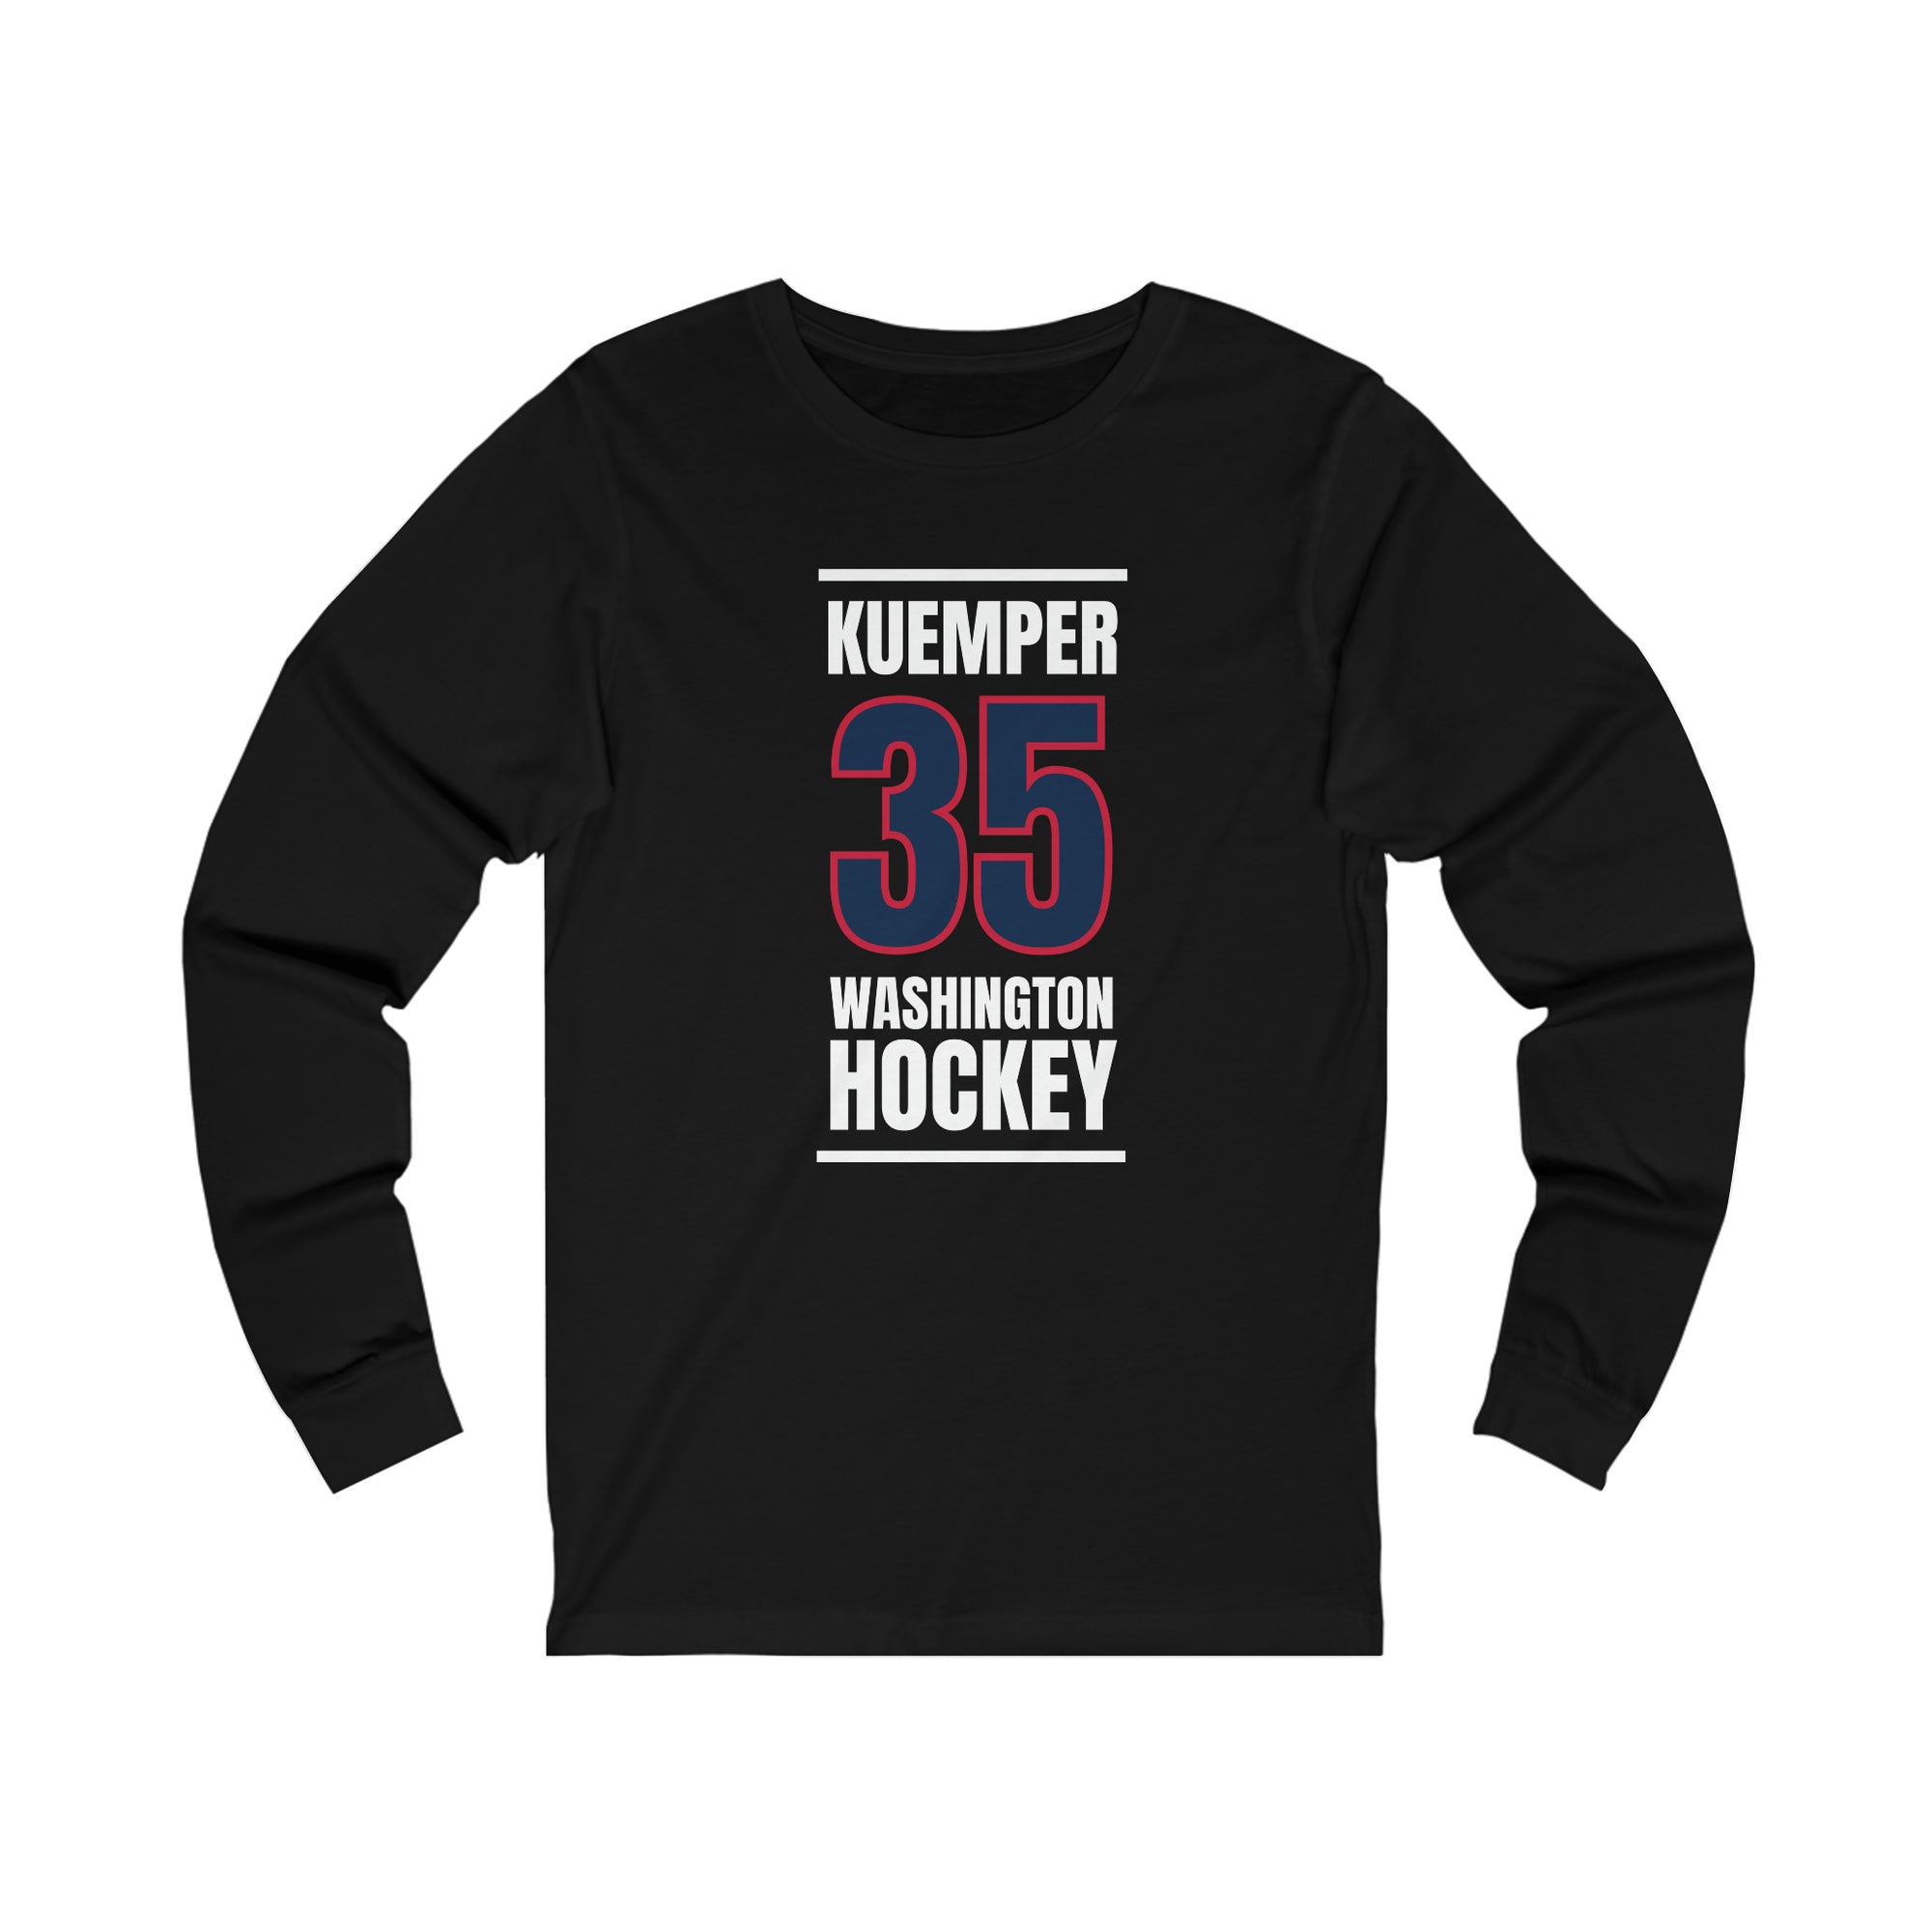 Kuemper 35 Washington Hockey Navy Vertical Design Unisex Jersey Long Sleeve Shirt